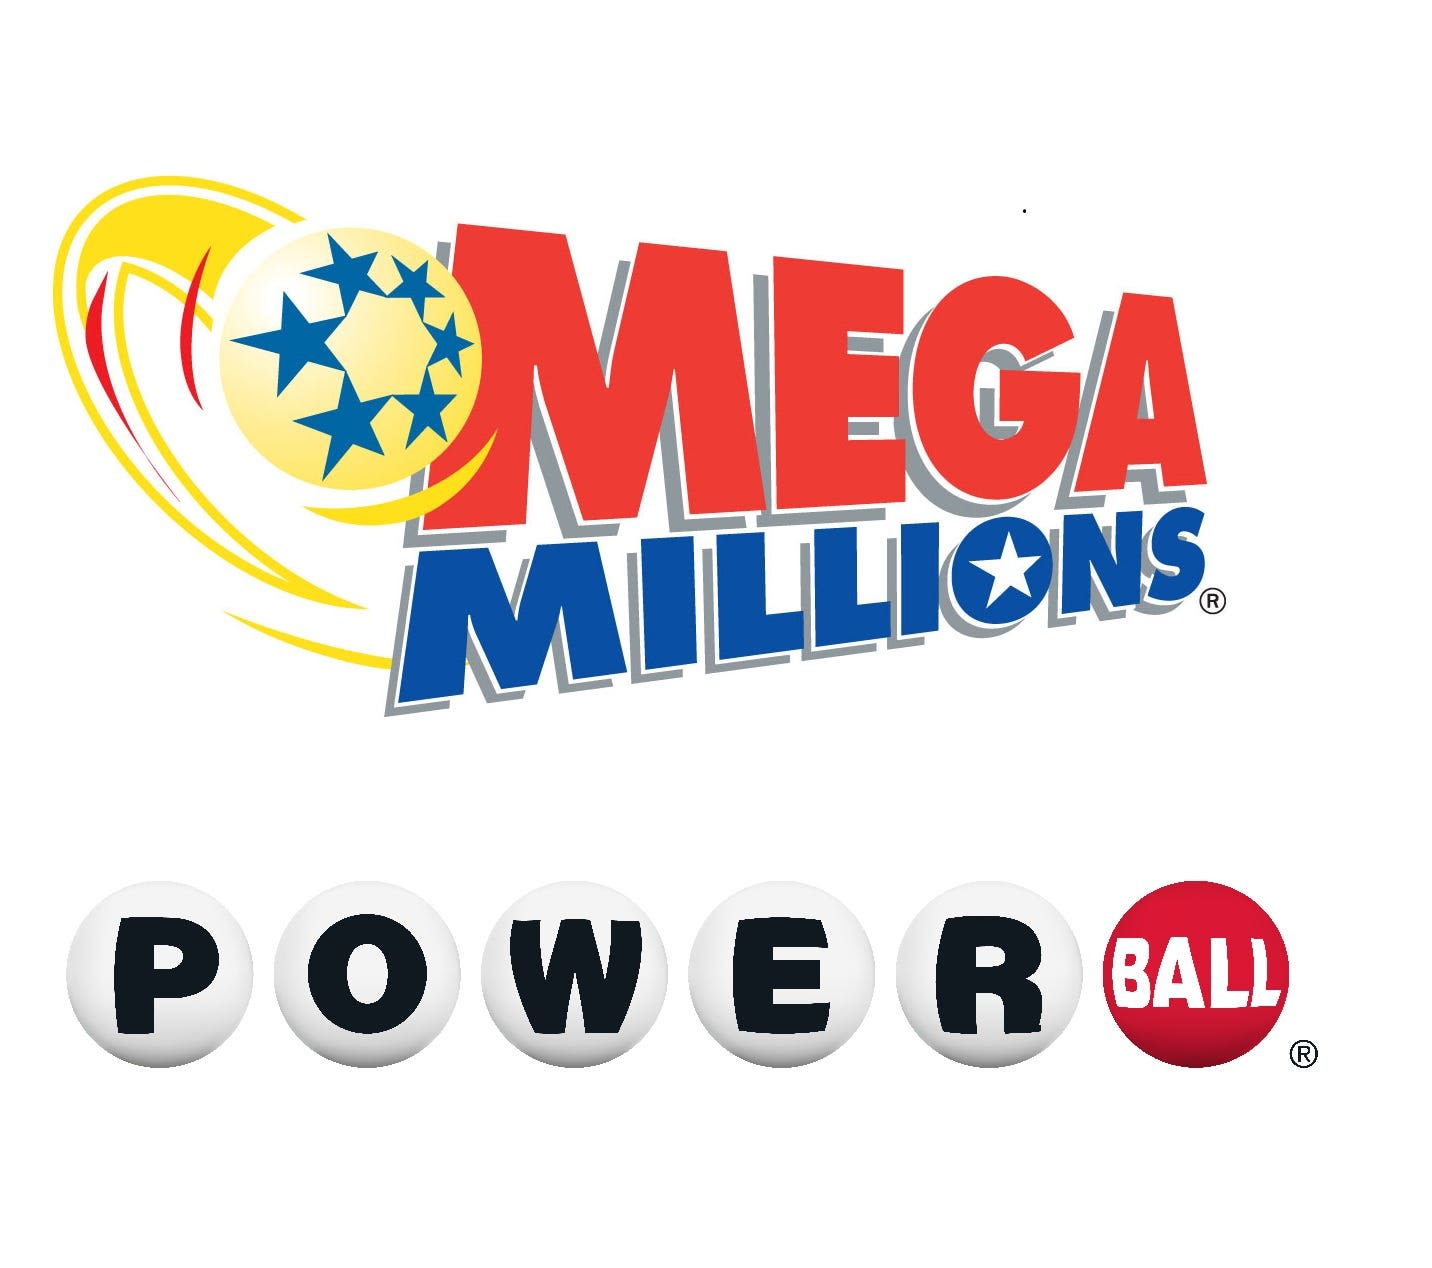 21 New Jersey lottery players won big playing Mega Millions, Powerball, NJ Lottery games